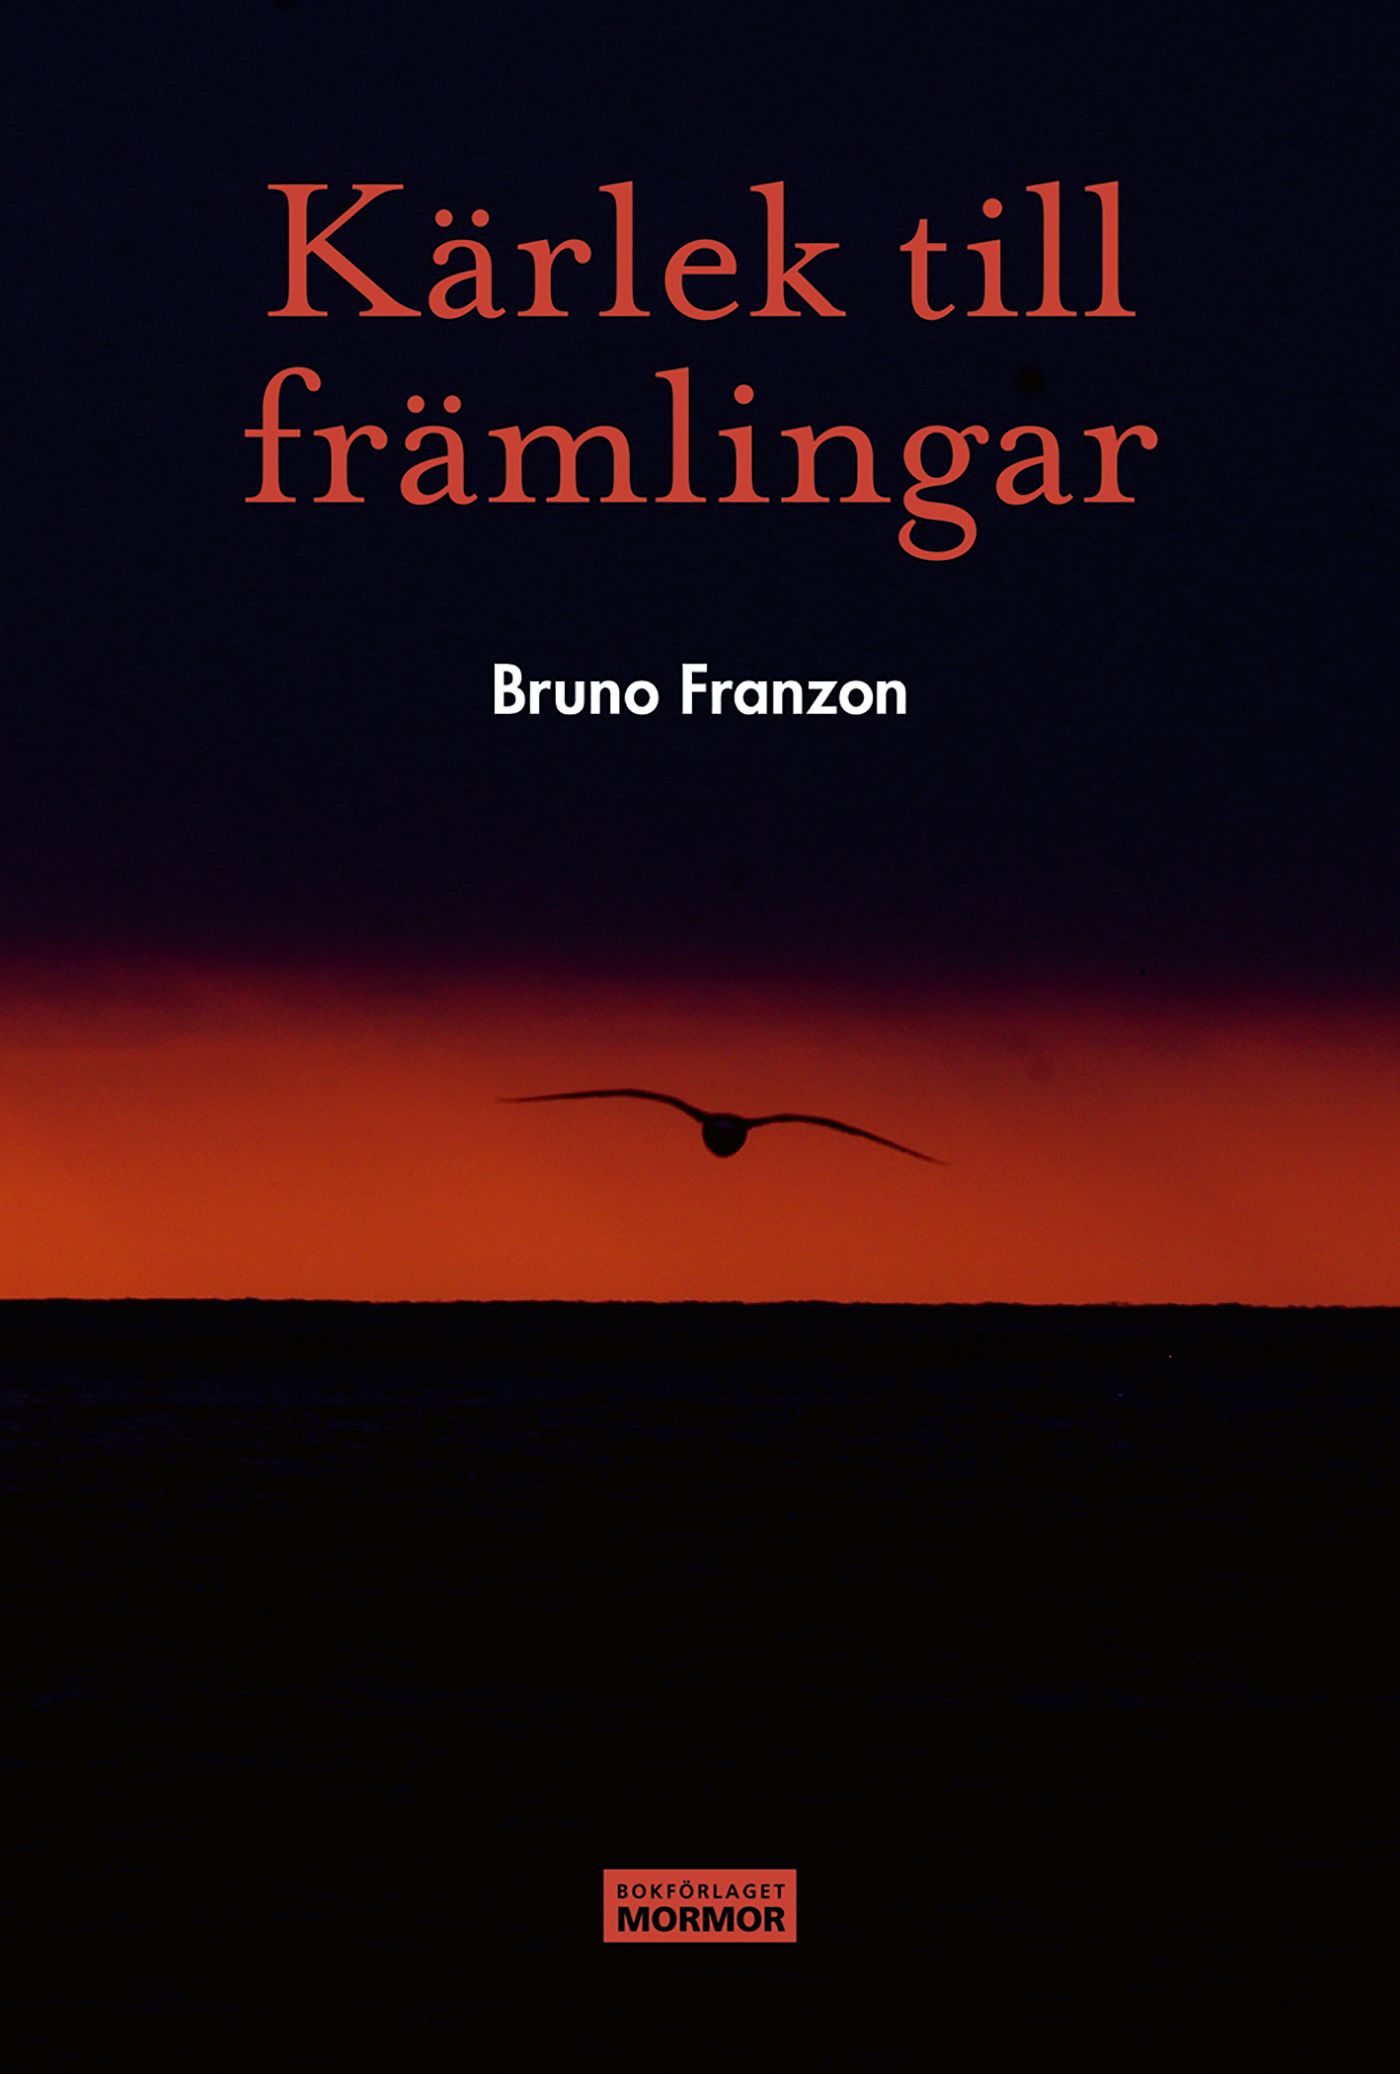 Kärlek till främlingar, e-bog af Bruno Franzon